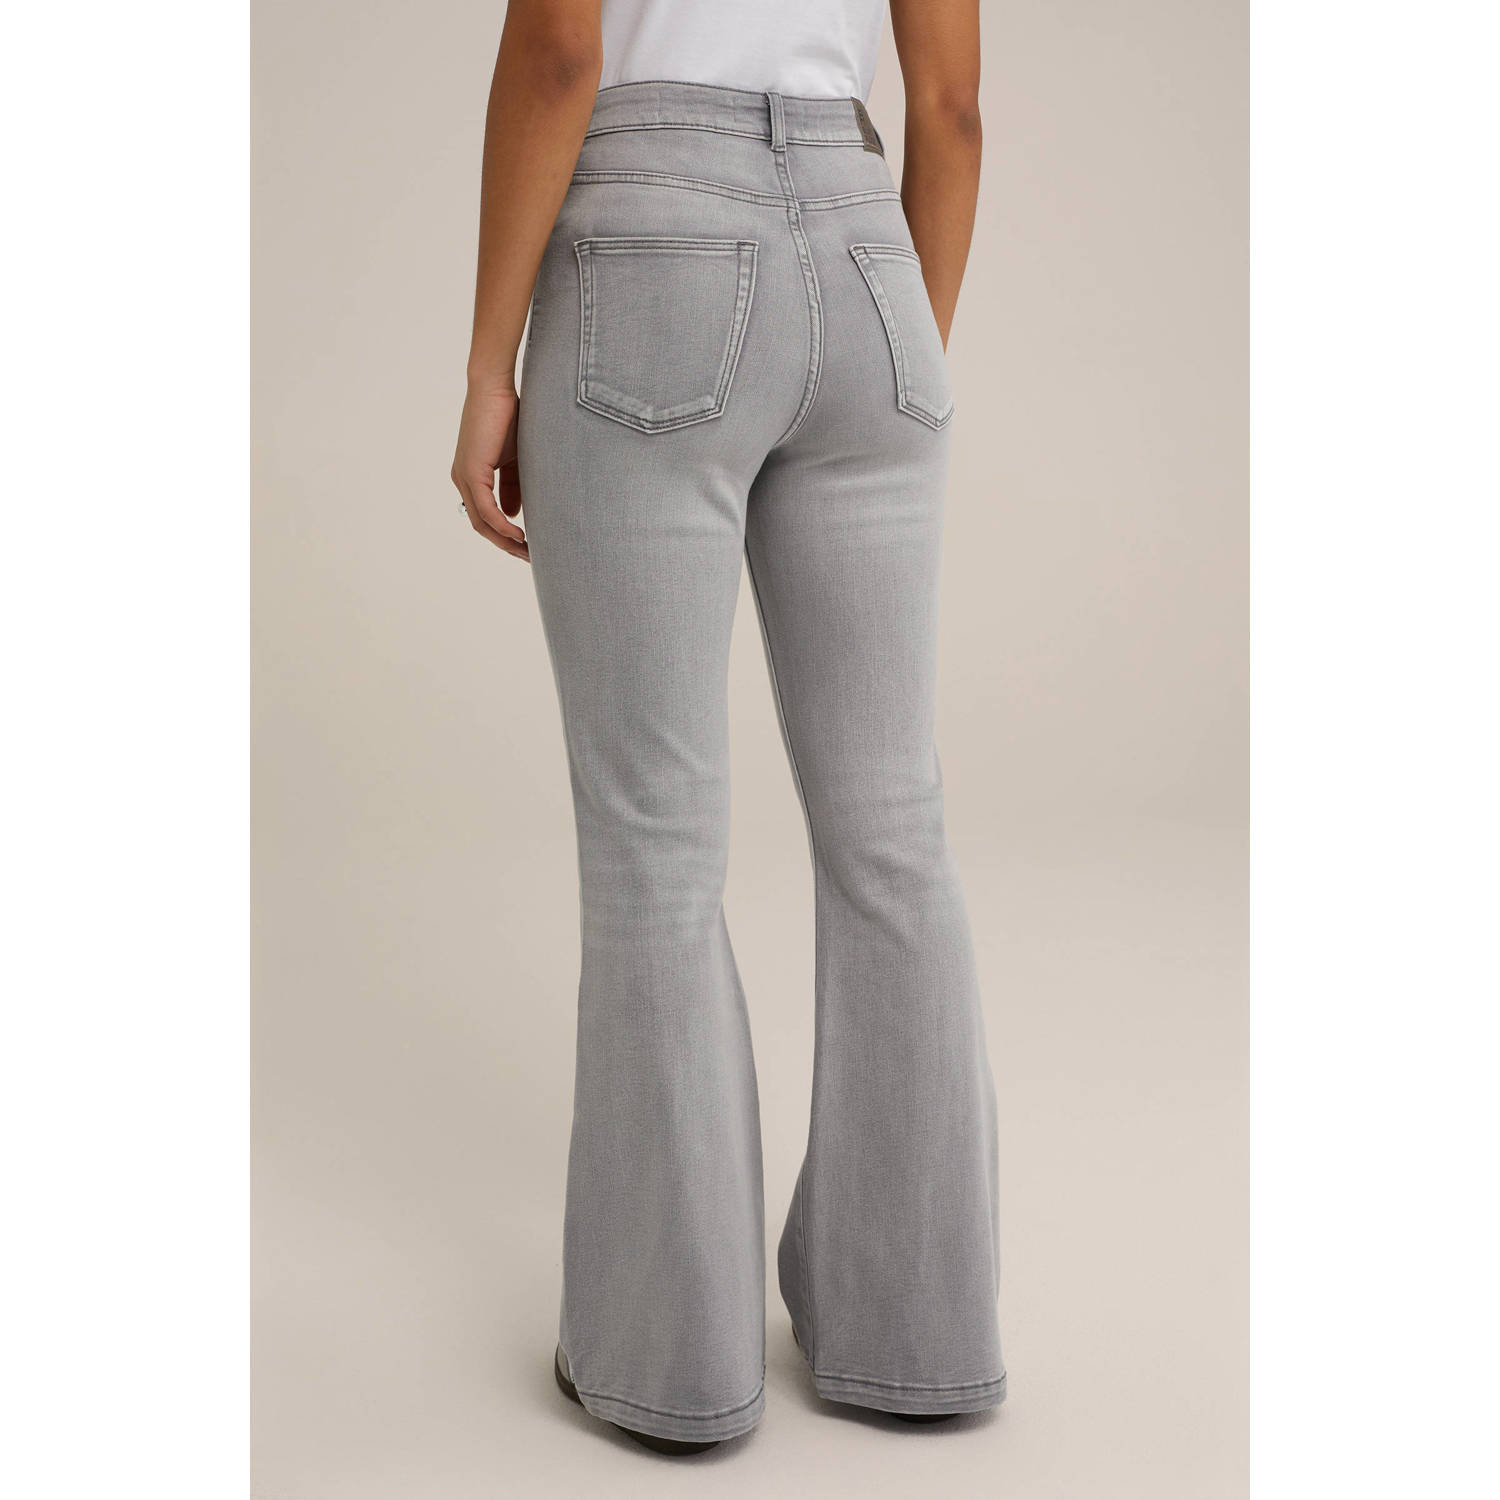 WE Fashion Blue Ridge flared jeans grey denim